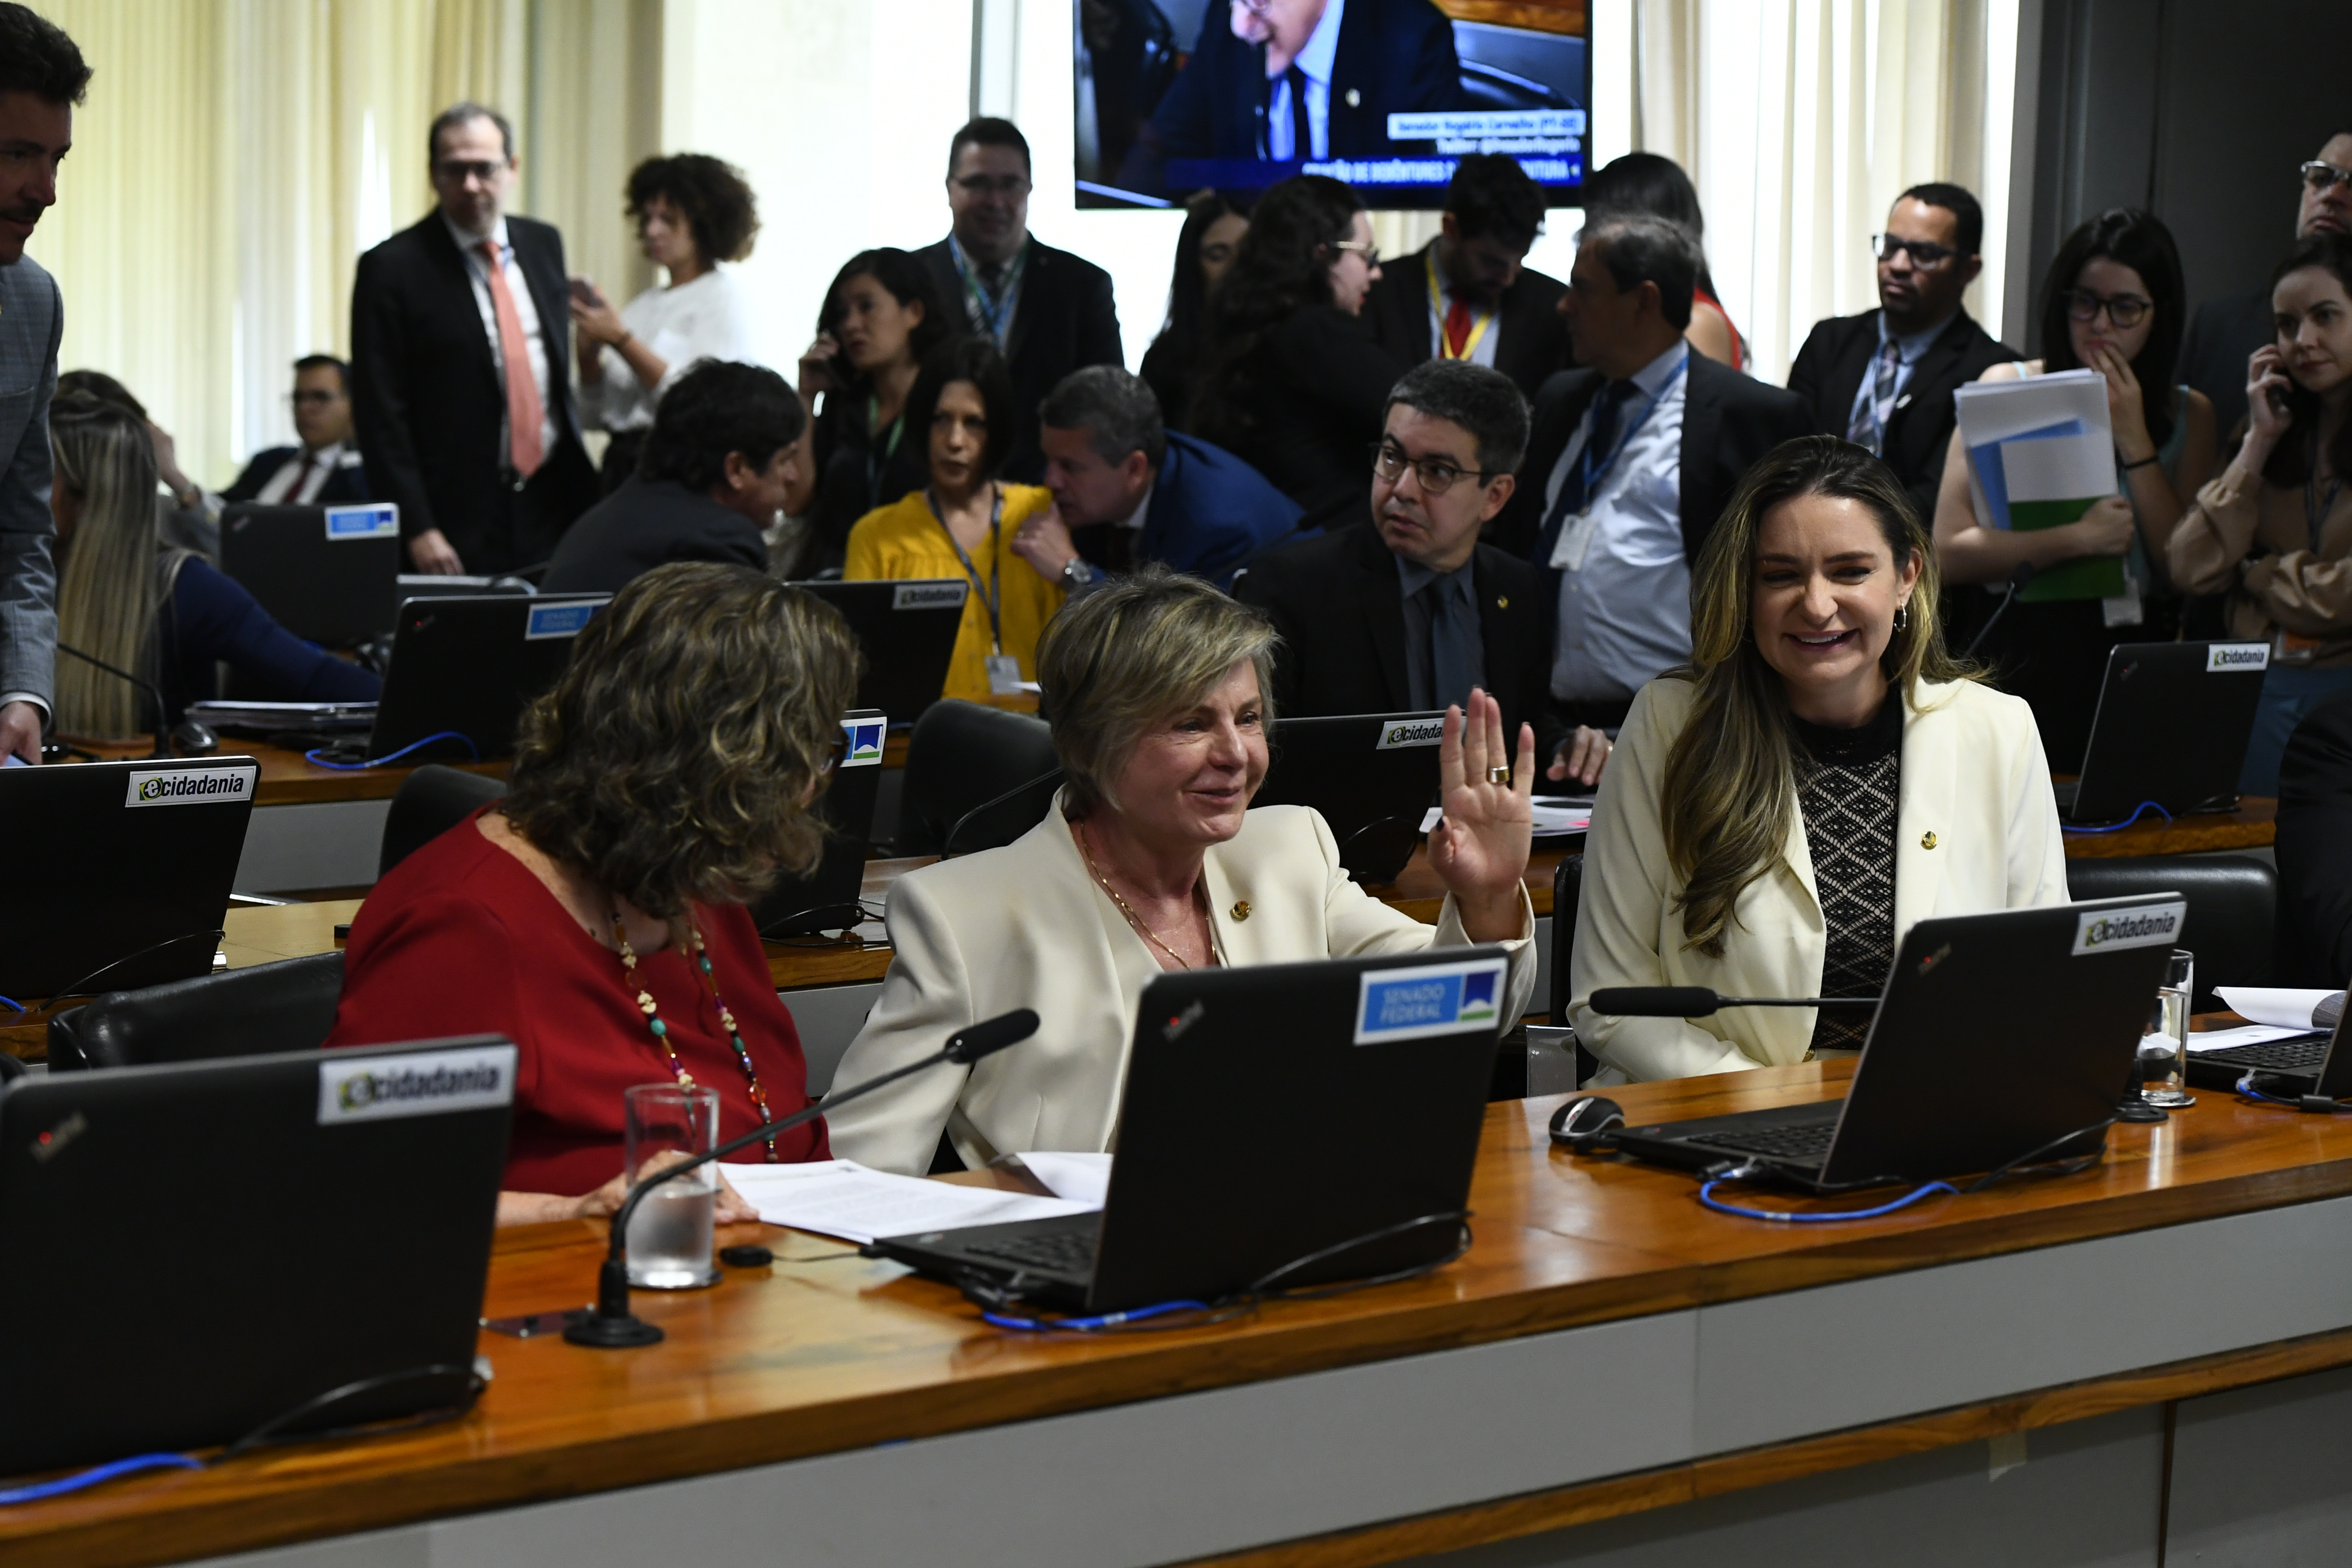 Bancada:
senadora Teresa Leitão (PT-PE); 
senadora Margareth Buzetti (PSD-MT);
senadora Augusta Brito (PT-CE).